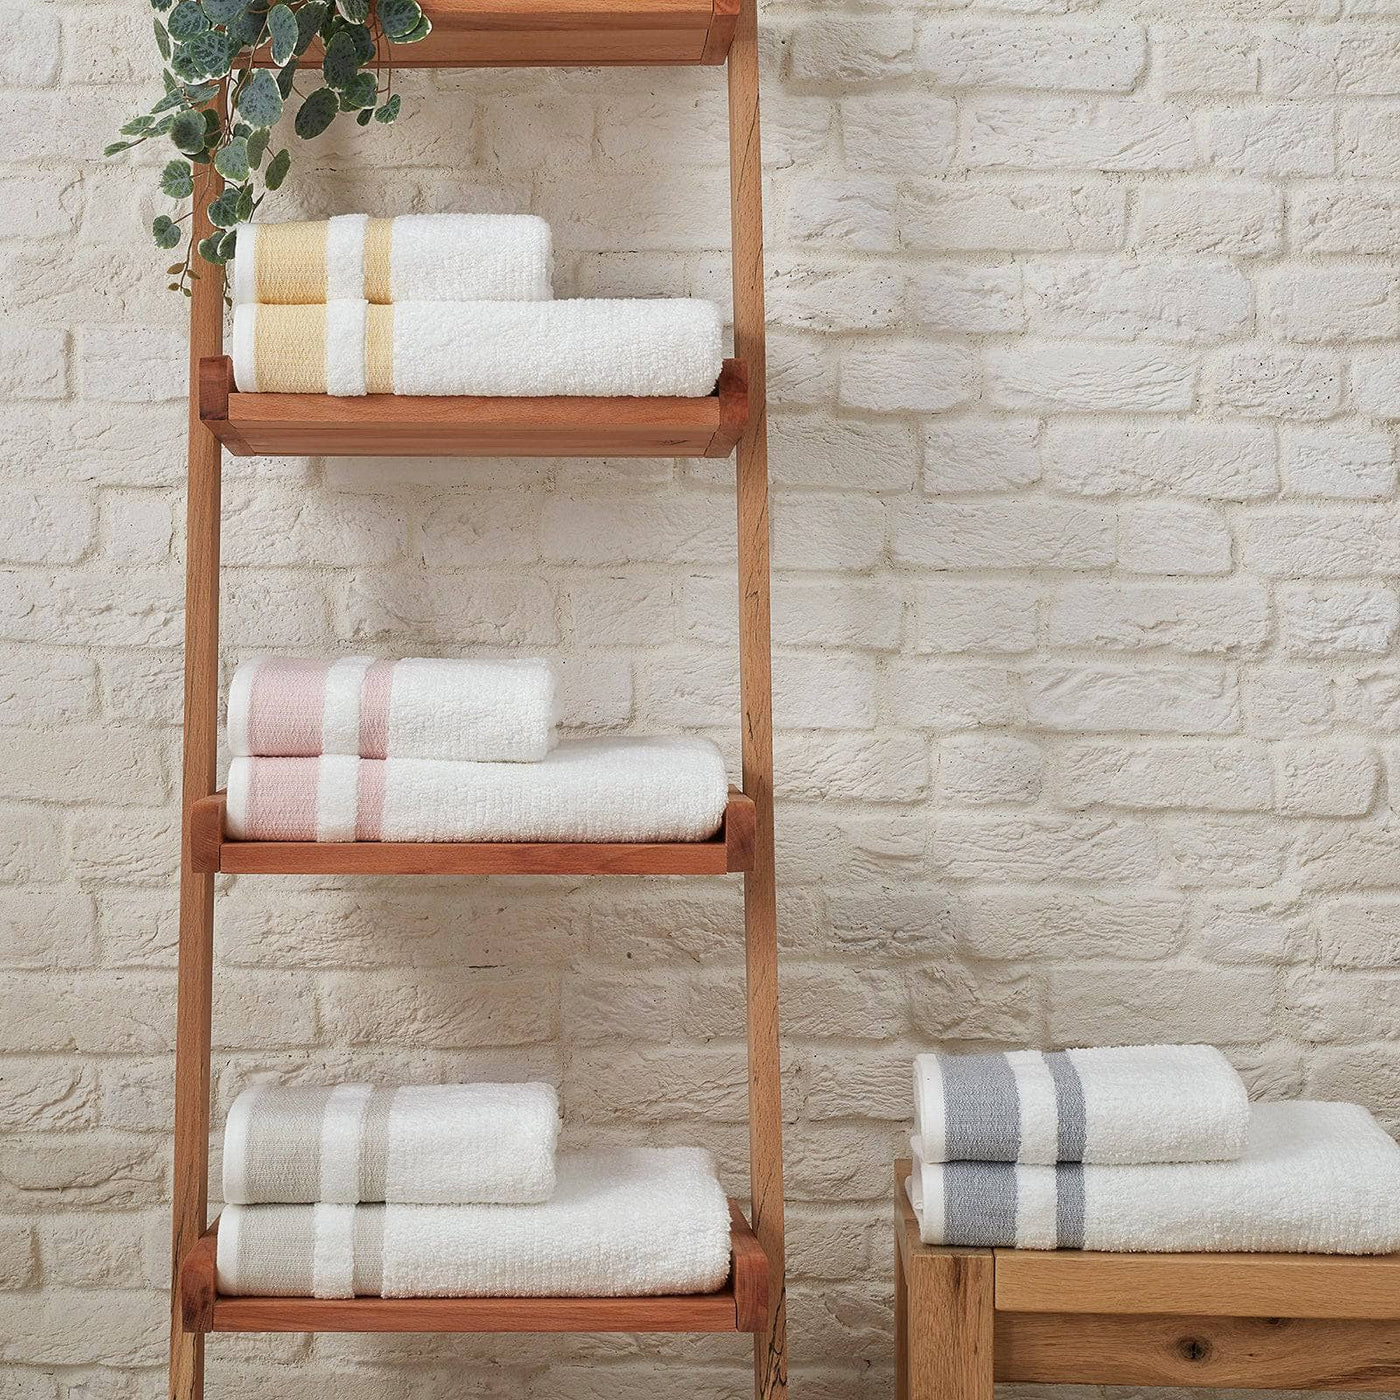 Charlotte Striped 100% Turkish Cotton Towel Set, Beige Towel Sets sazy.com